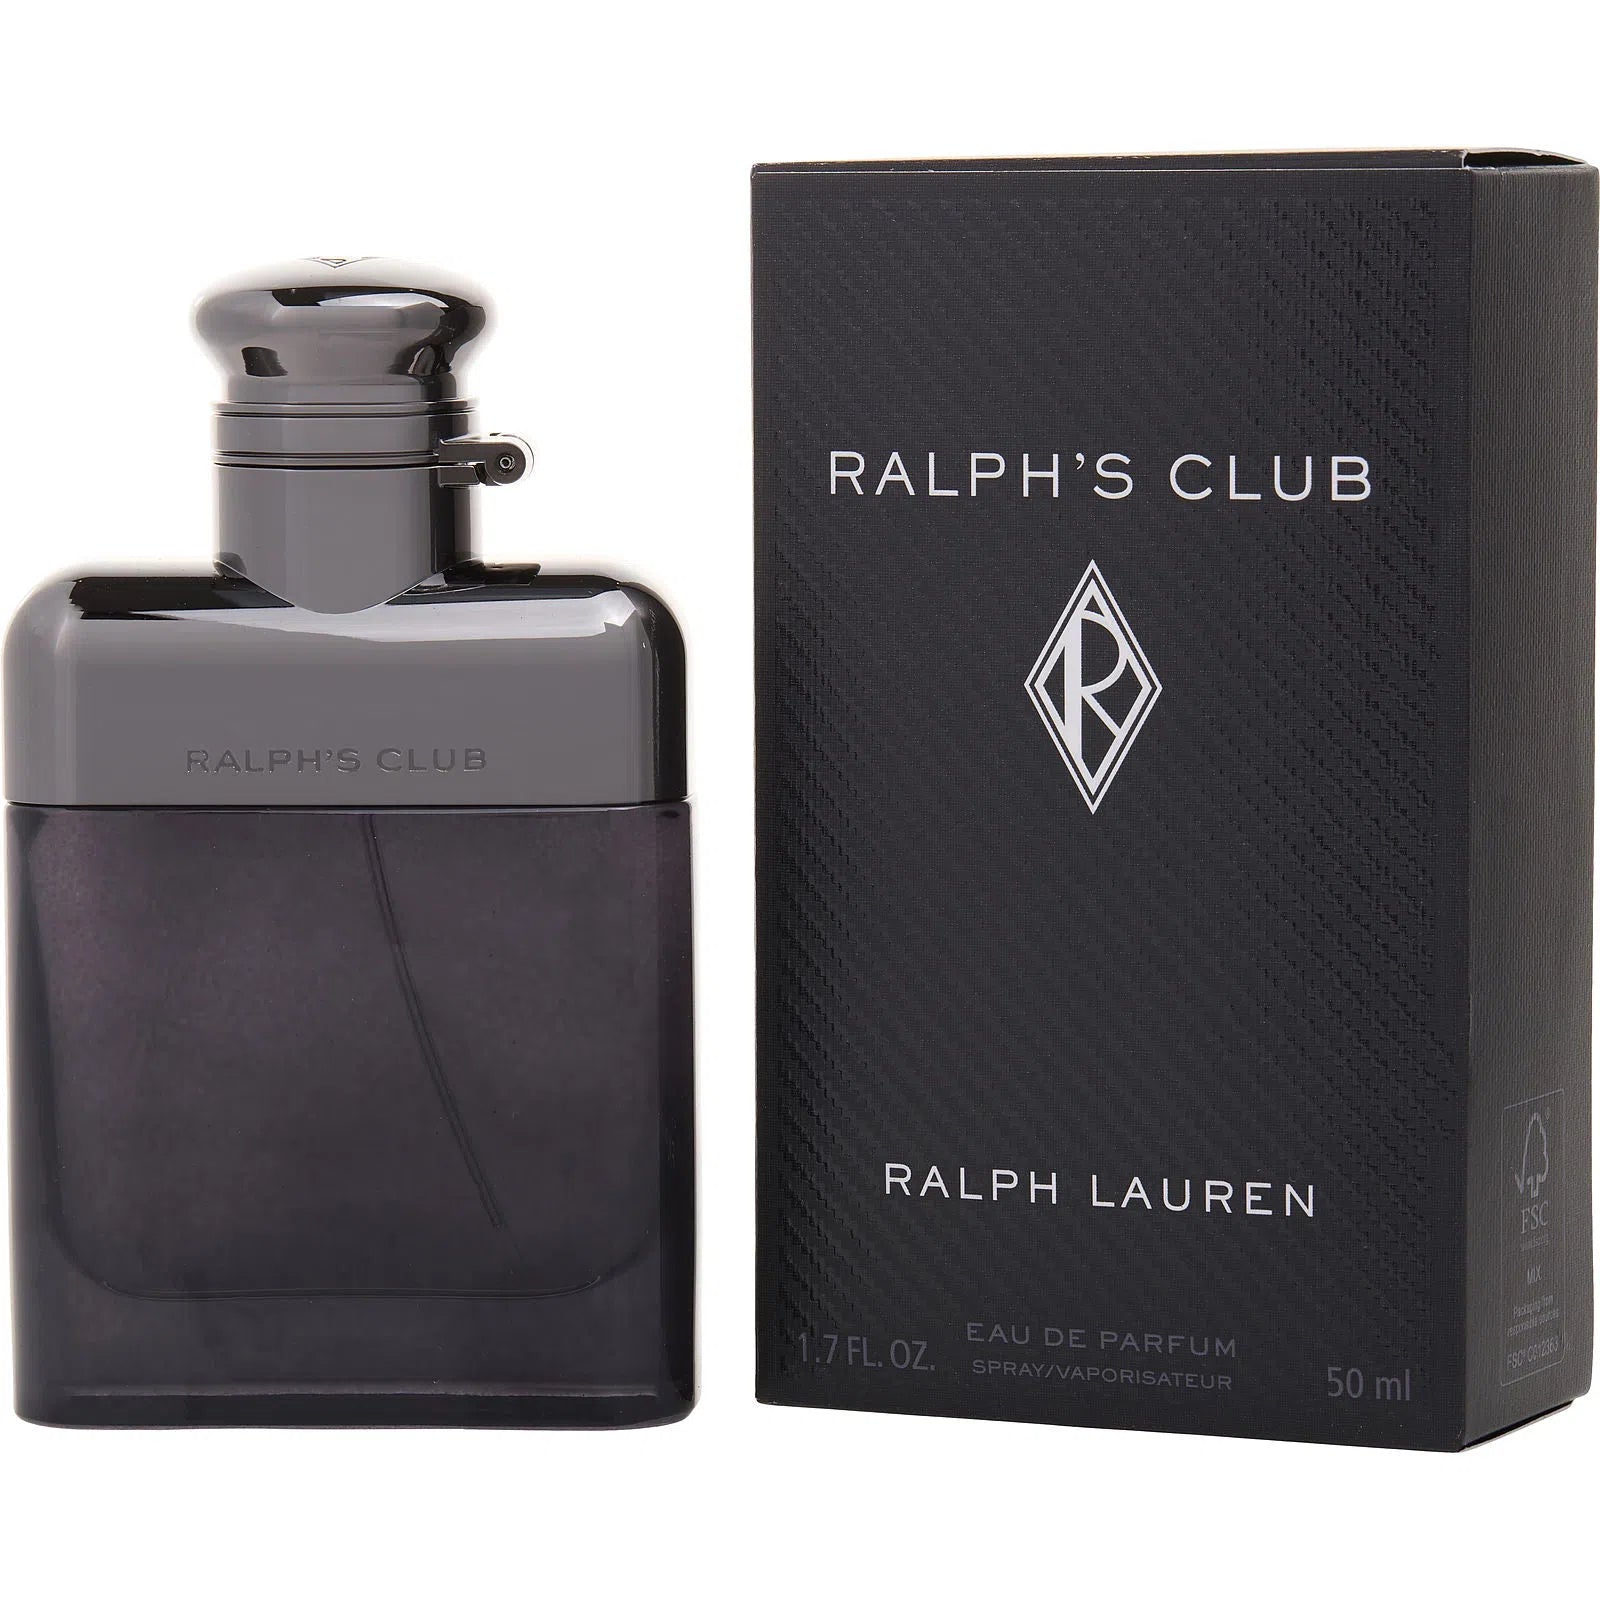 Perfume Ralph Lauren Ralph's Club EDP (M) / 50 ml - 3605971512612- Prive Perfumes Honduras